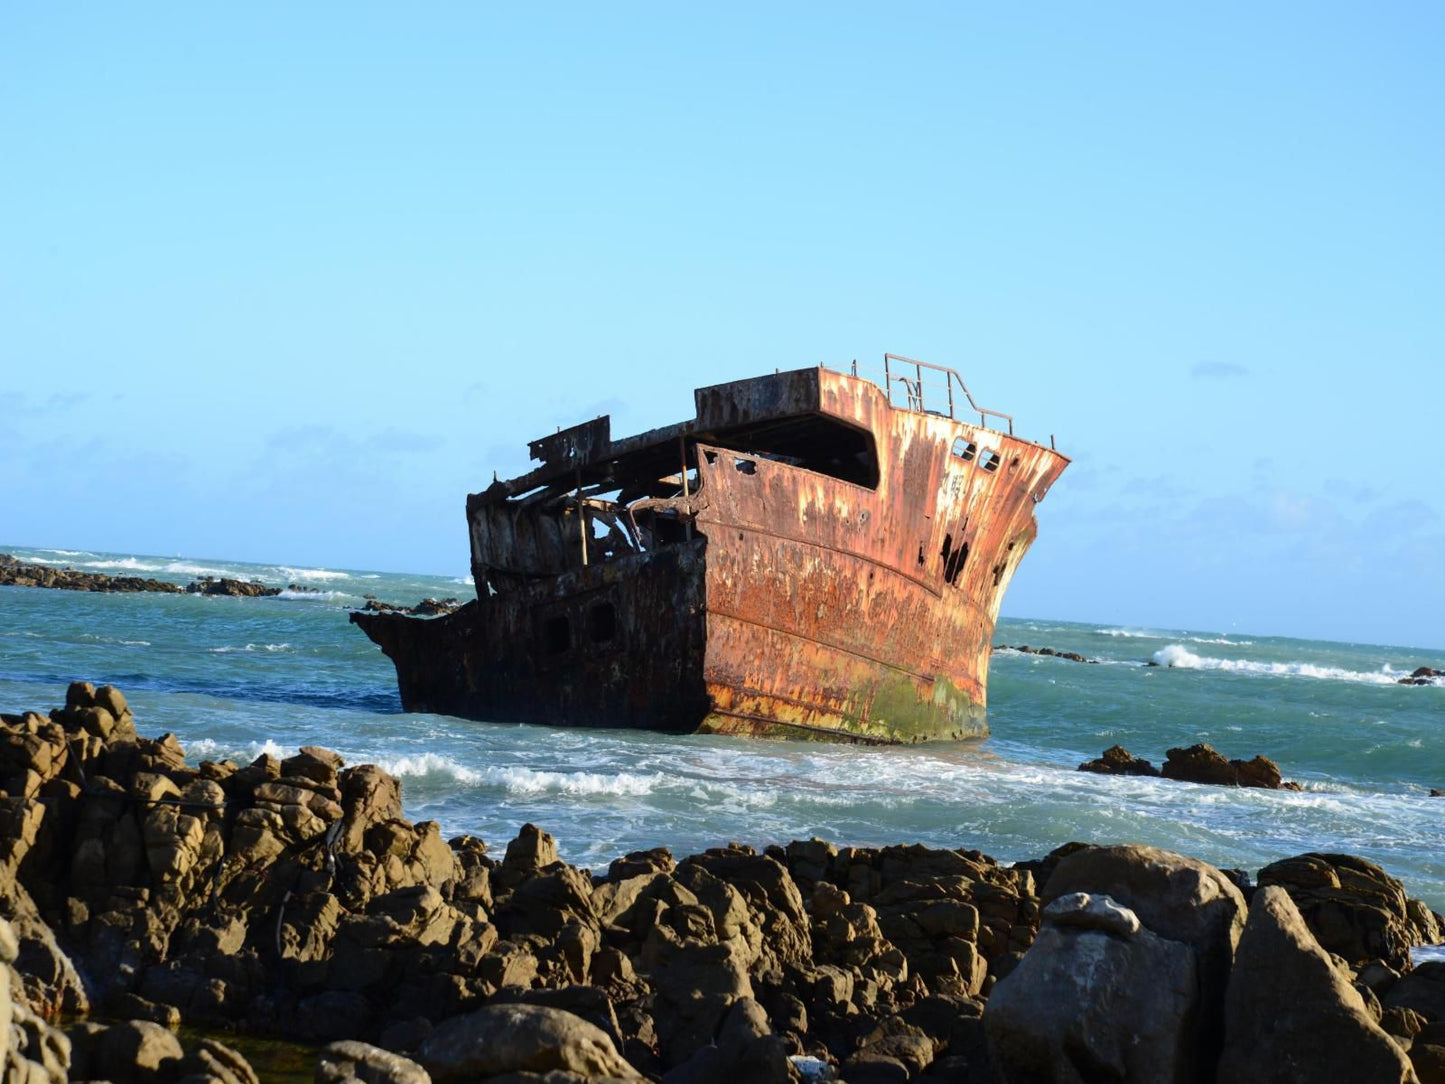 Kaalvoete Struisbaai Western Cape South Africa Beach, Nature, Sand, Ship, Vehicle